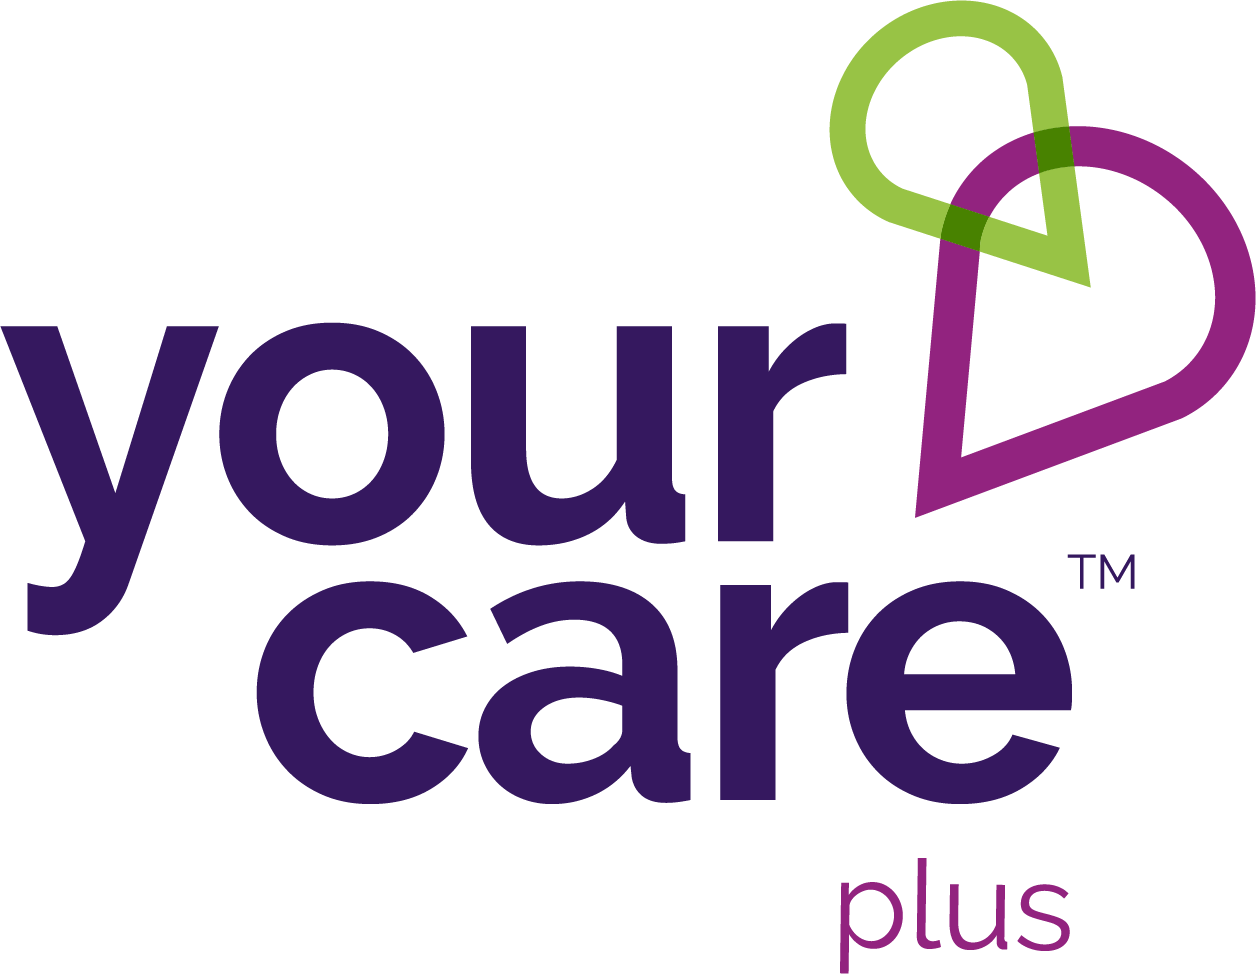 Your_Care-Plus copy